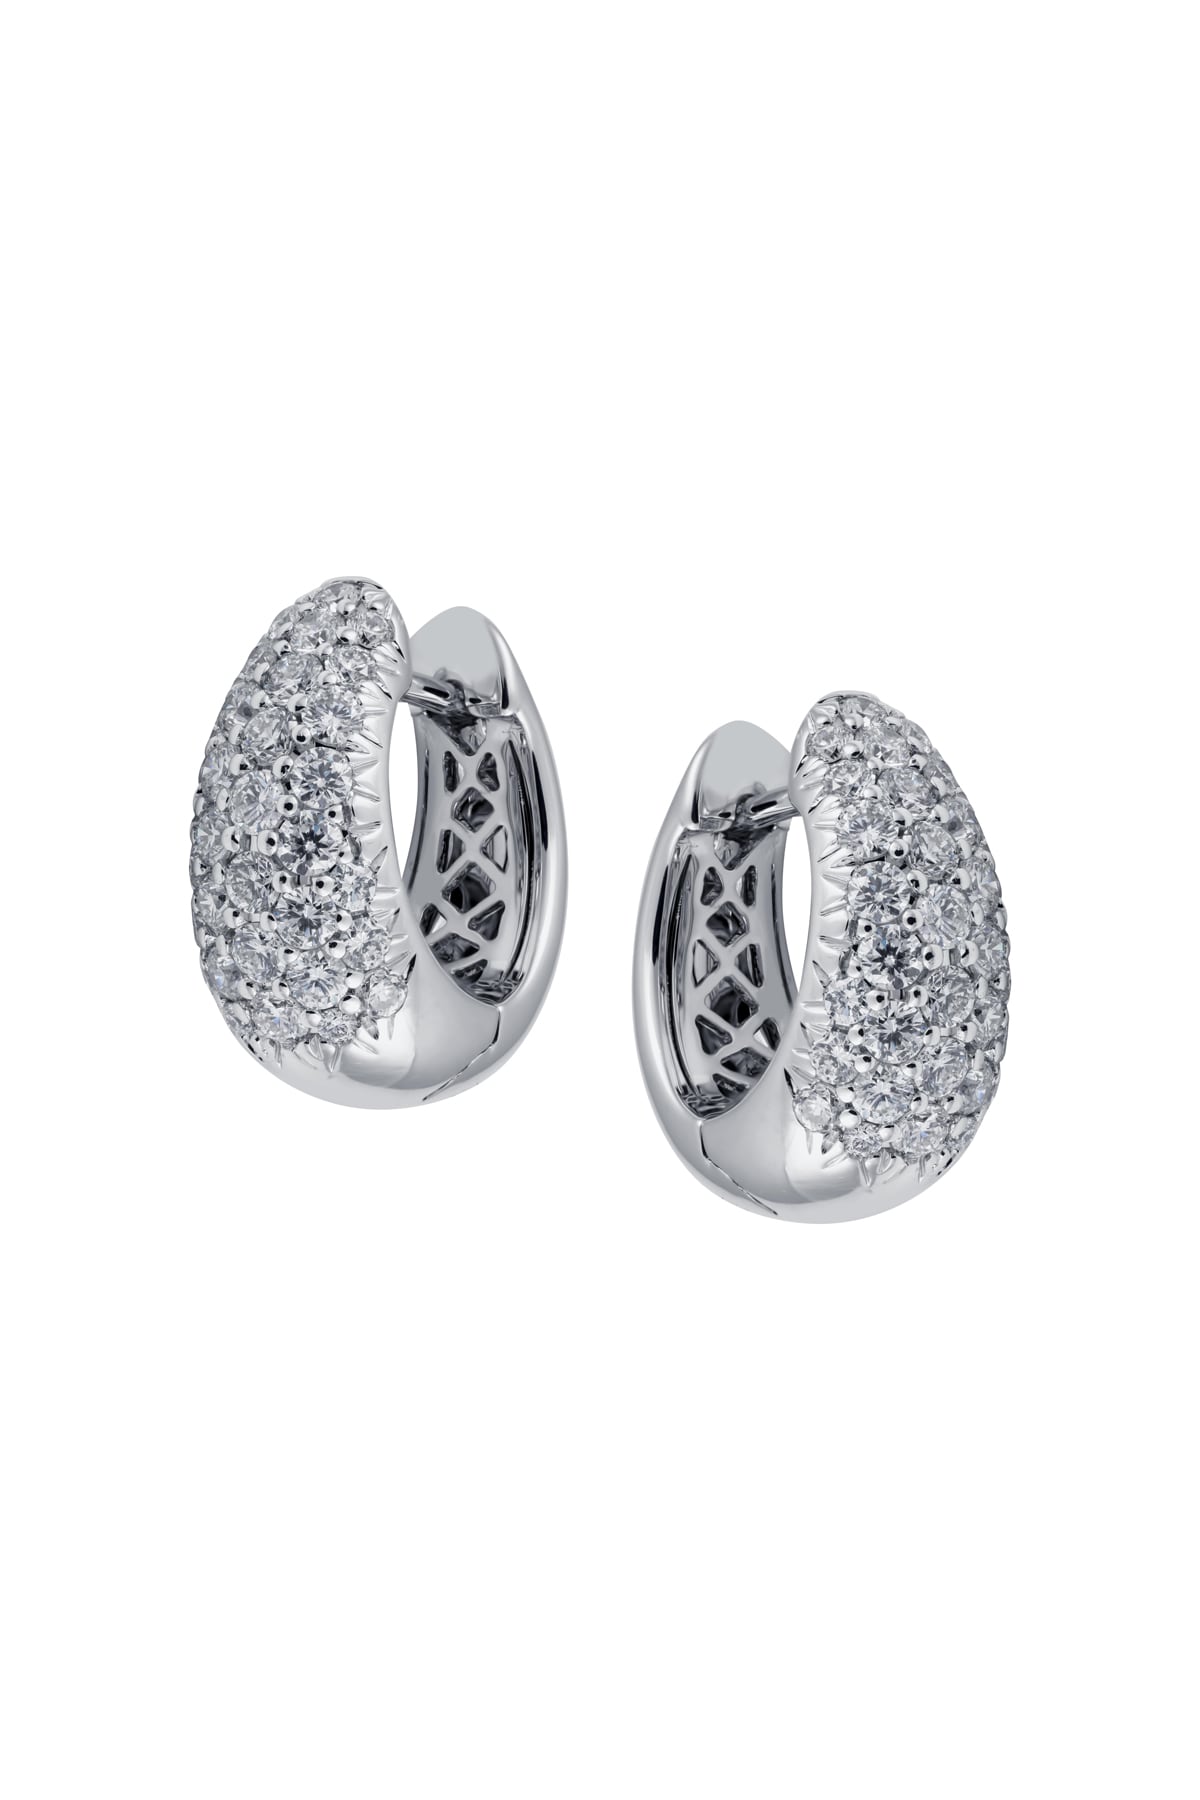 18 Carat White Gold Pave Diamond Earrings available at LeGassick Diamonds and Jewellery Gold Coast, Australia.